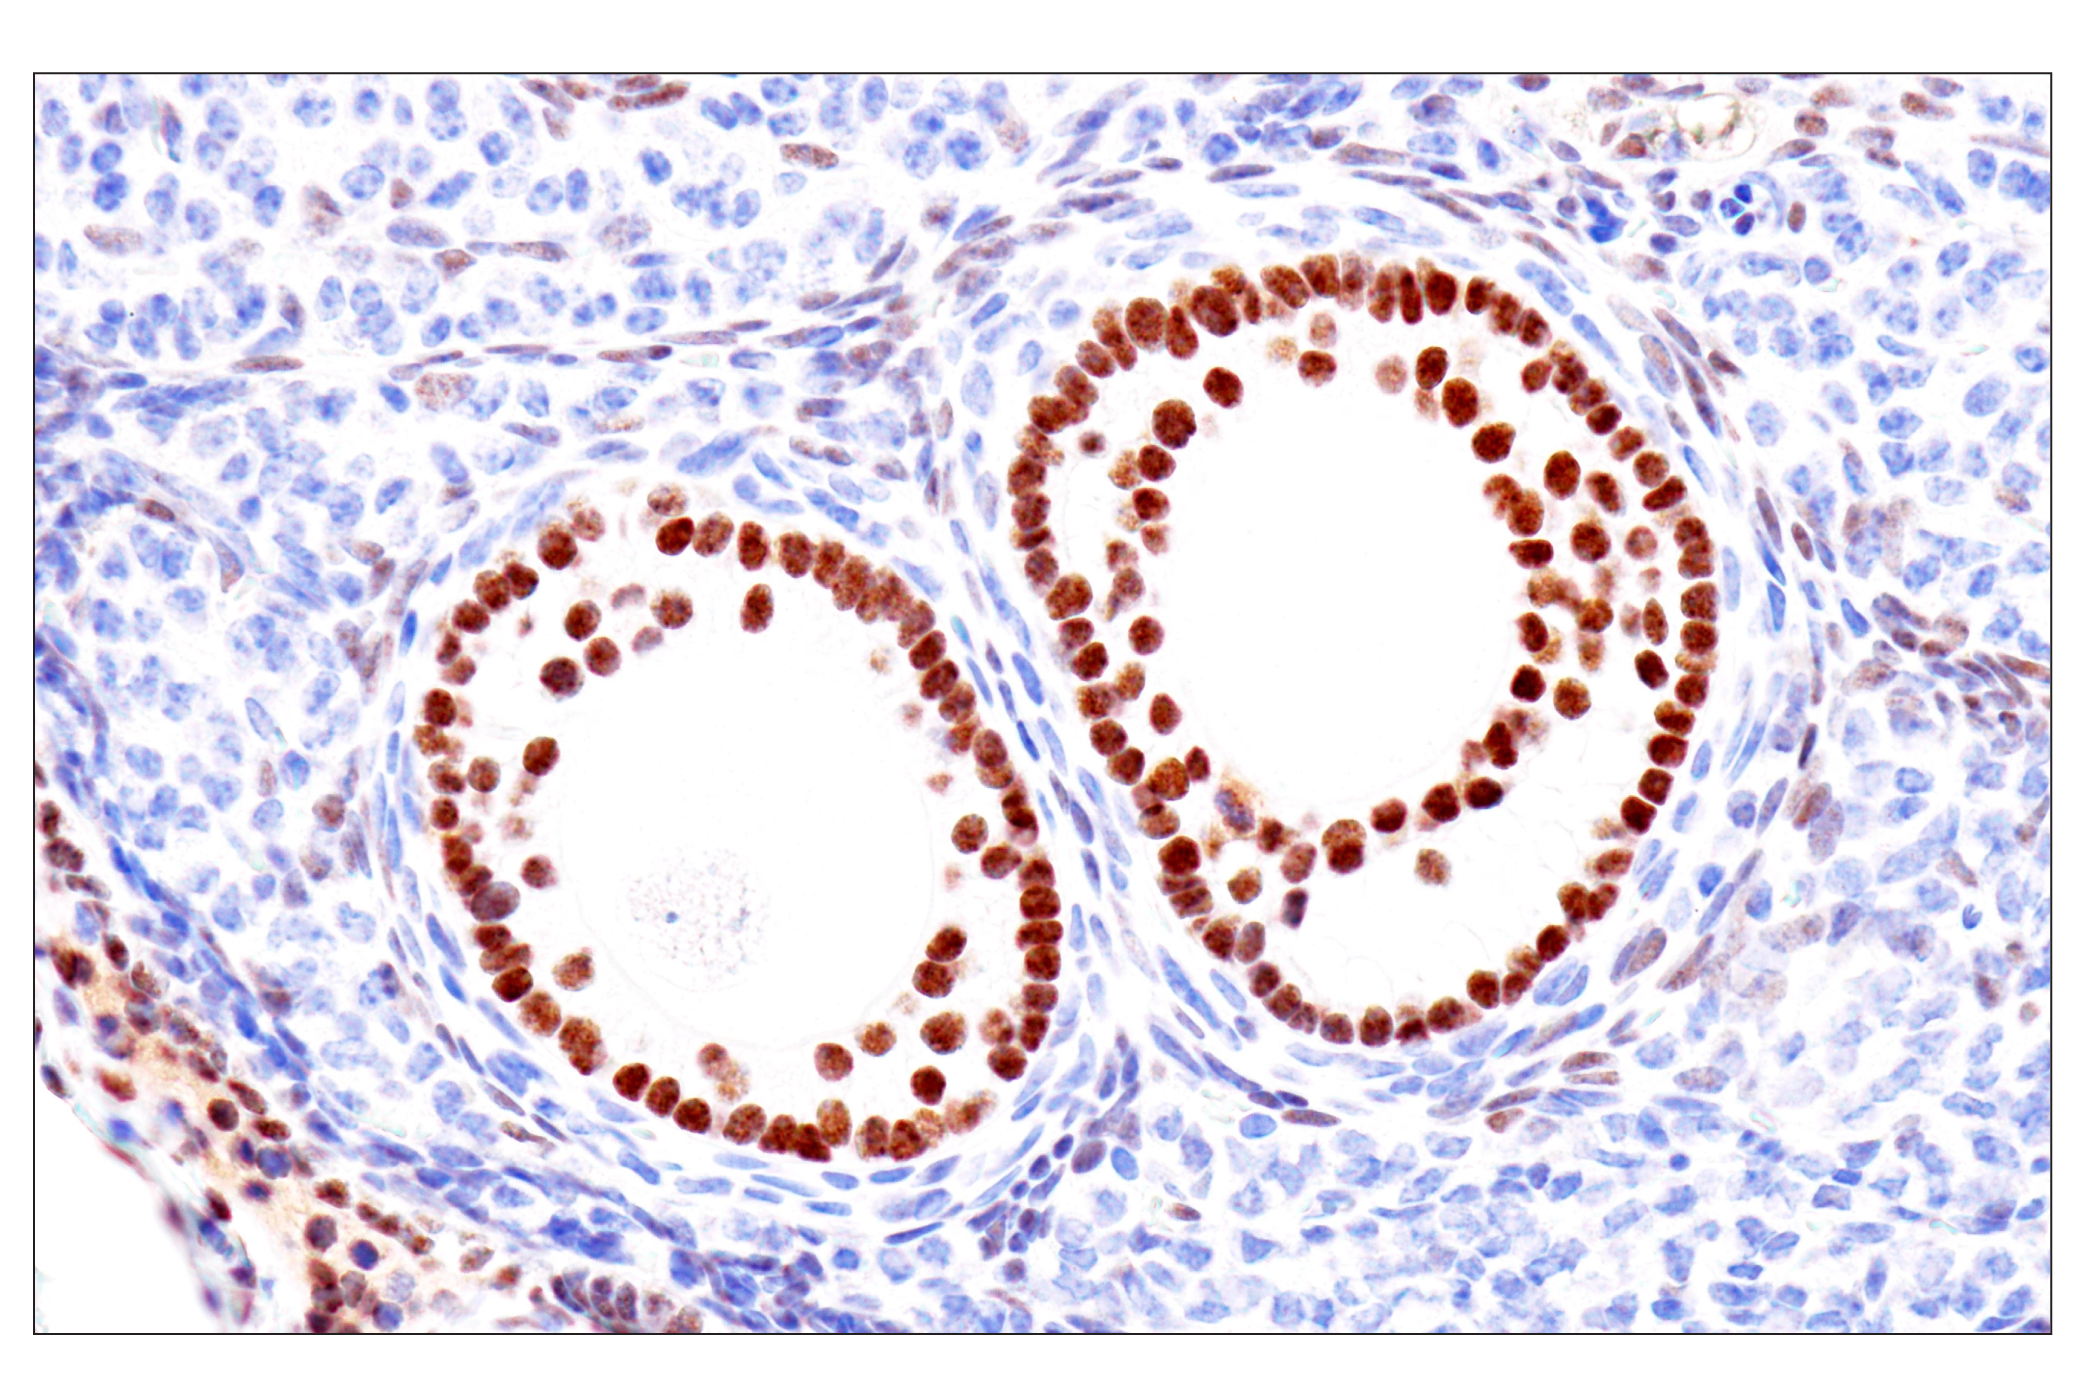  Image 46: Cardiogenesis Marker Antibody Sampler Kit